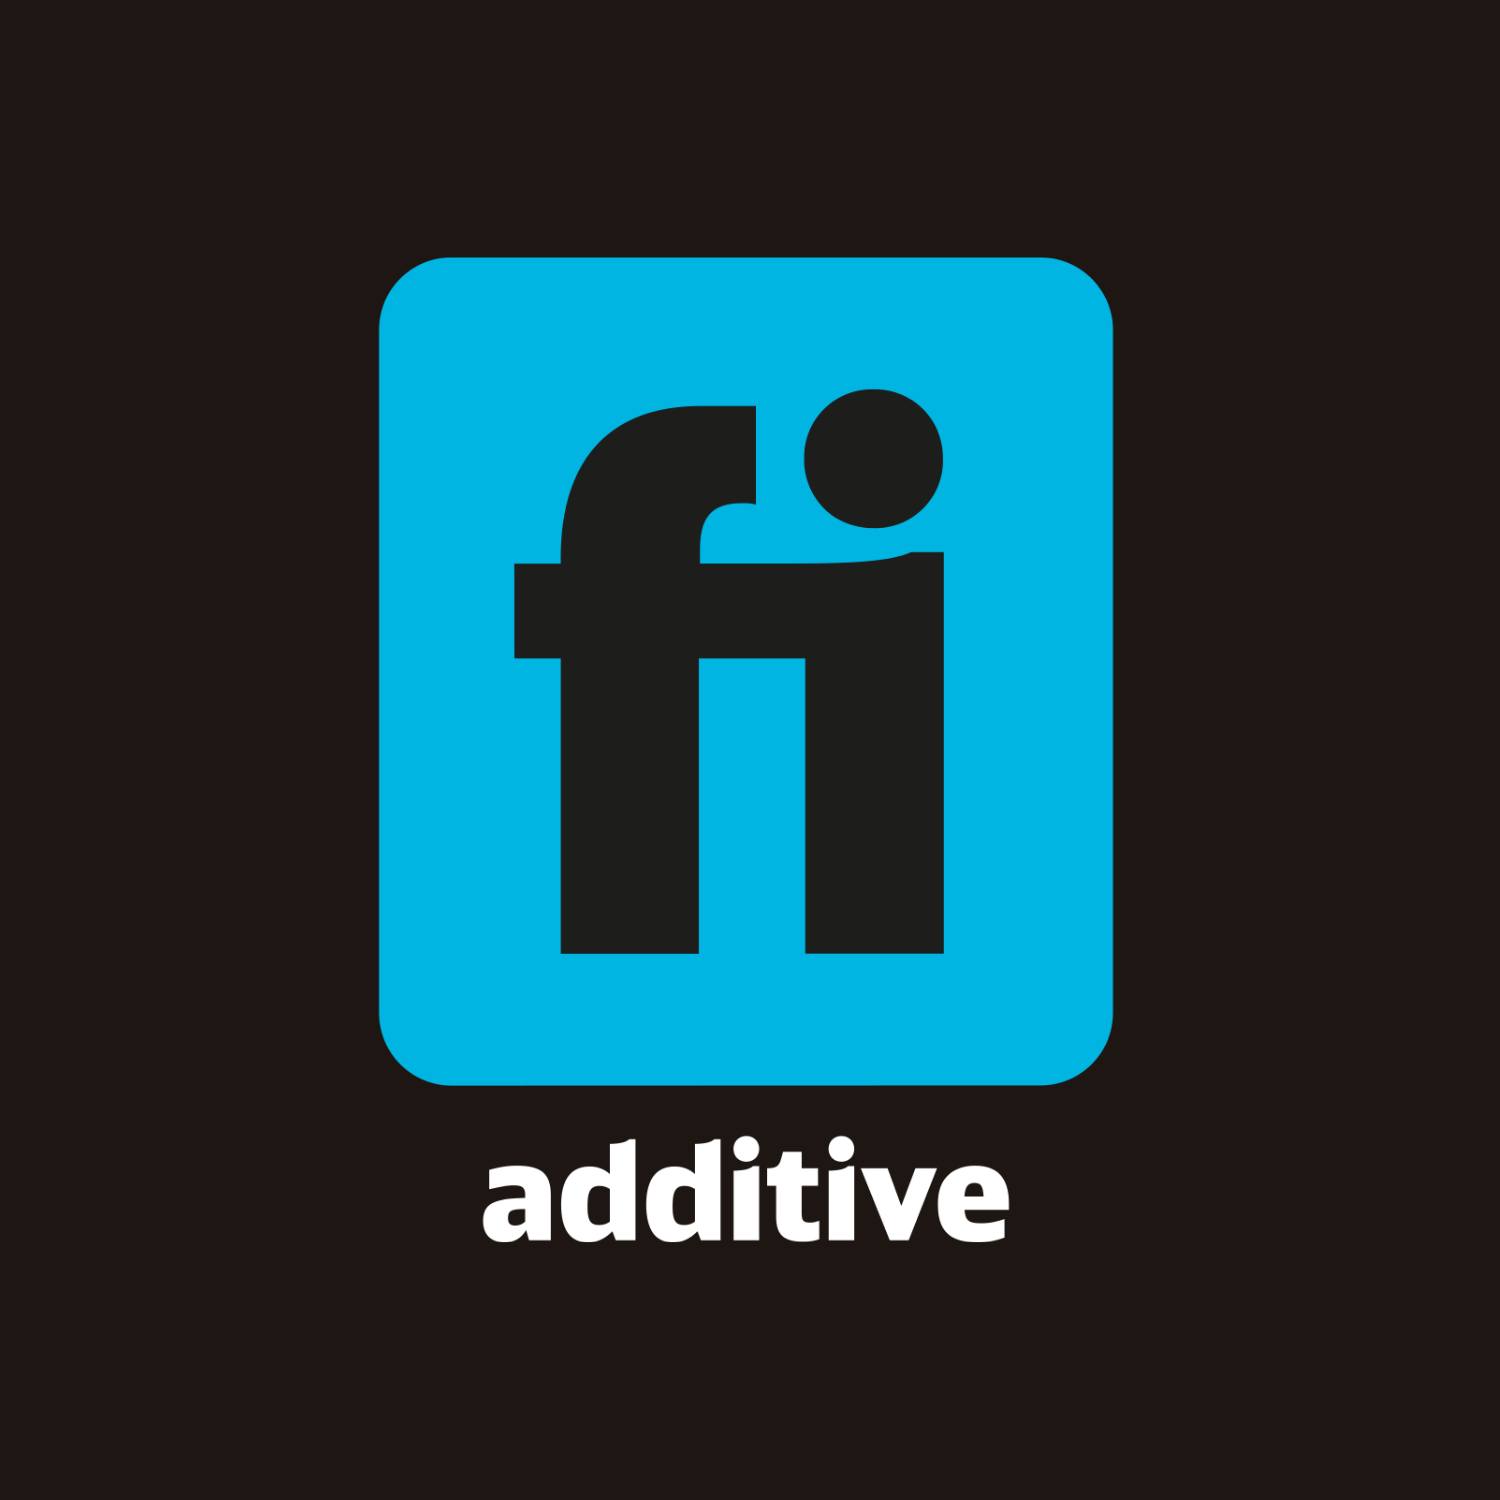 fi additive